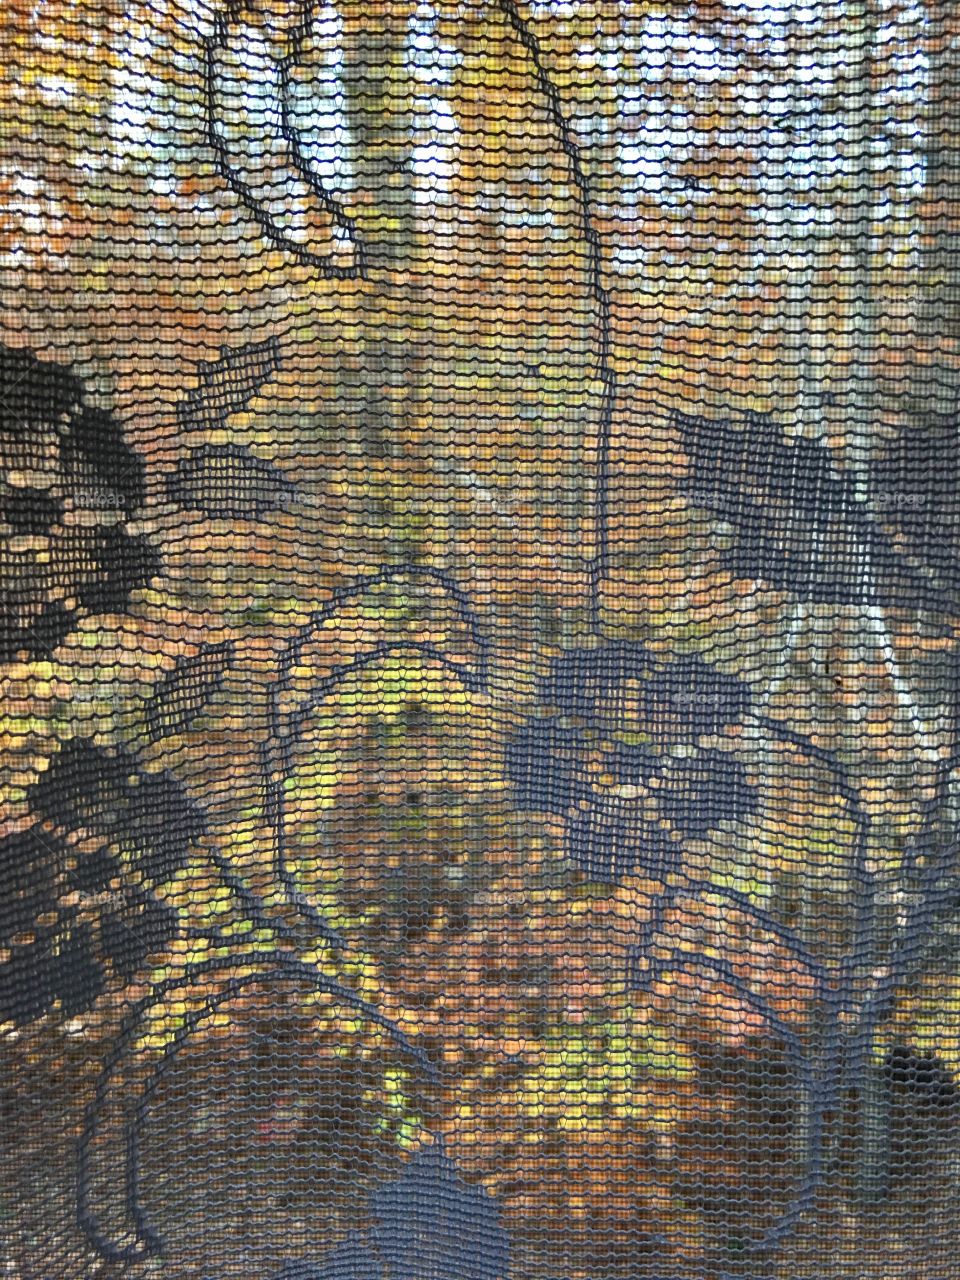 Lace Curtains Autumn View